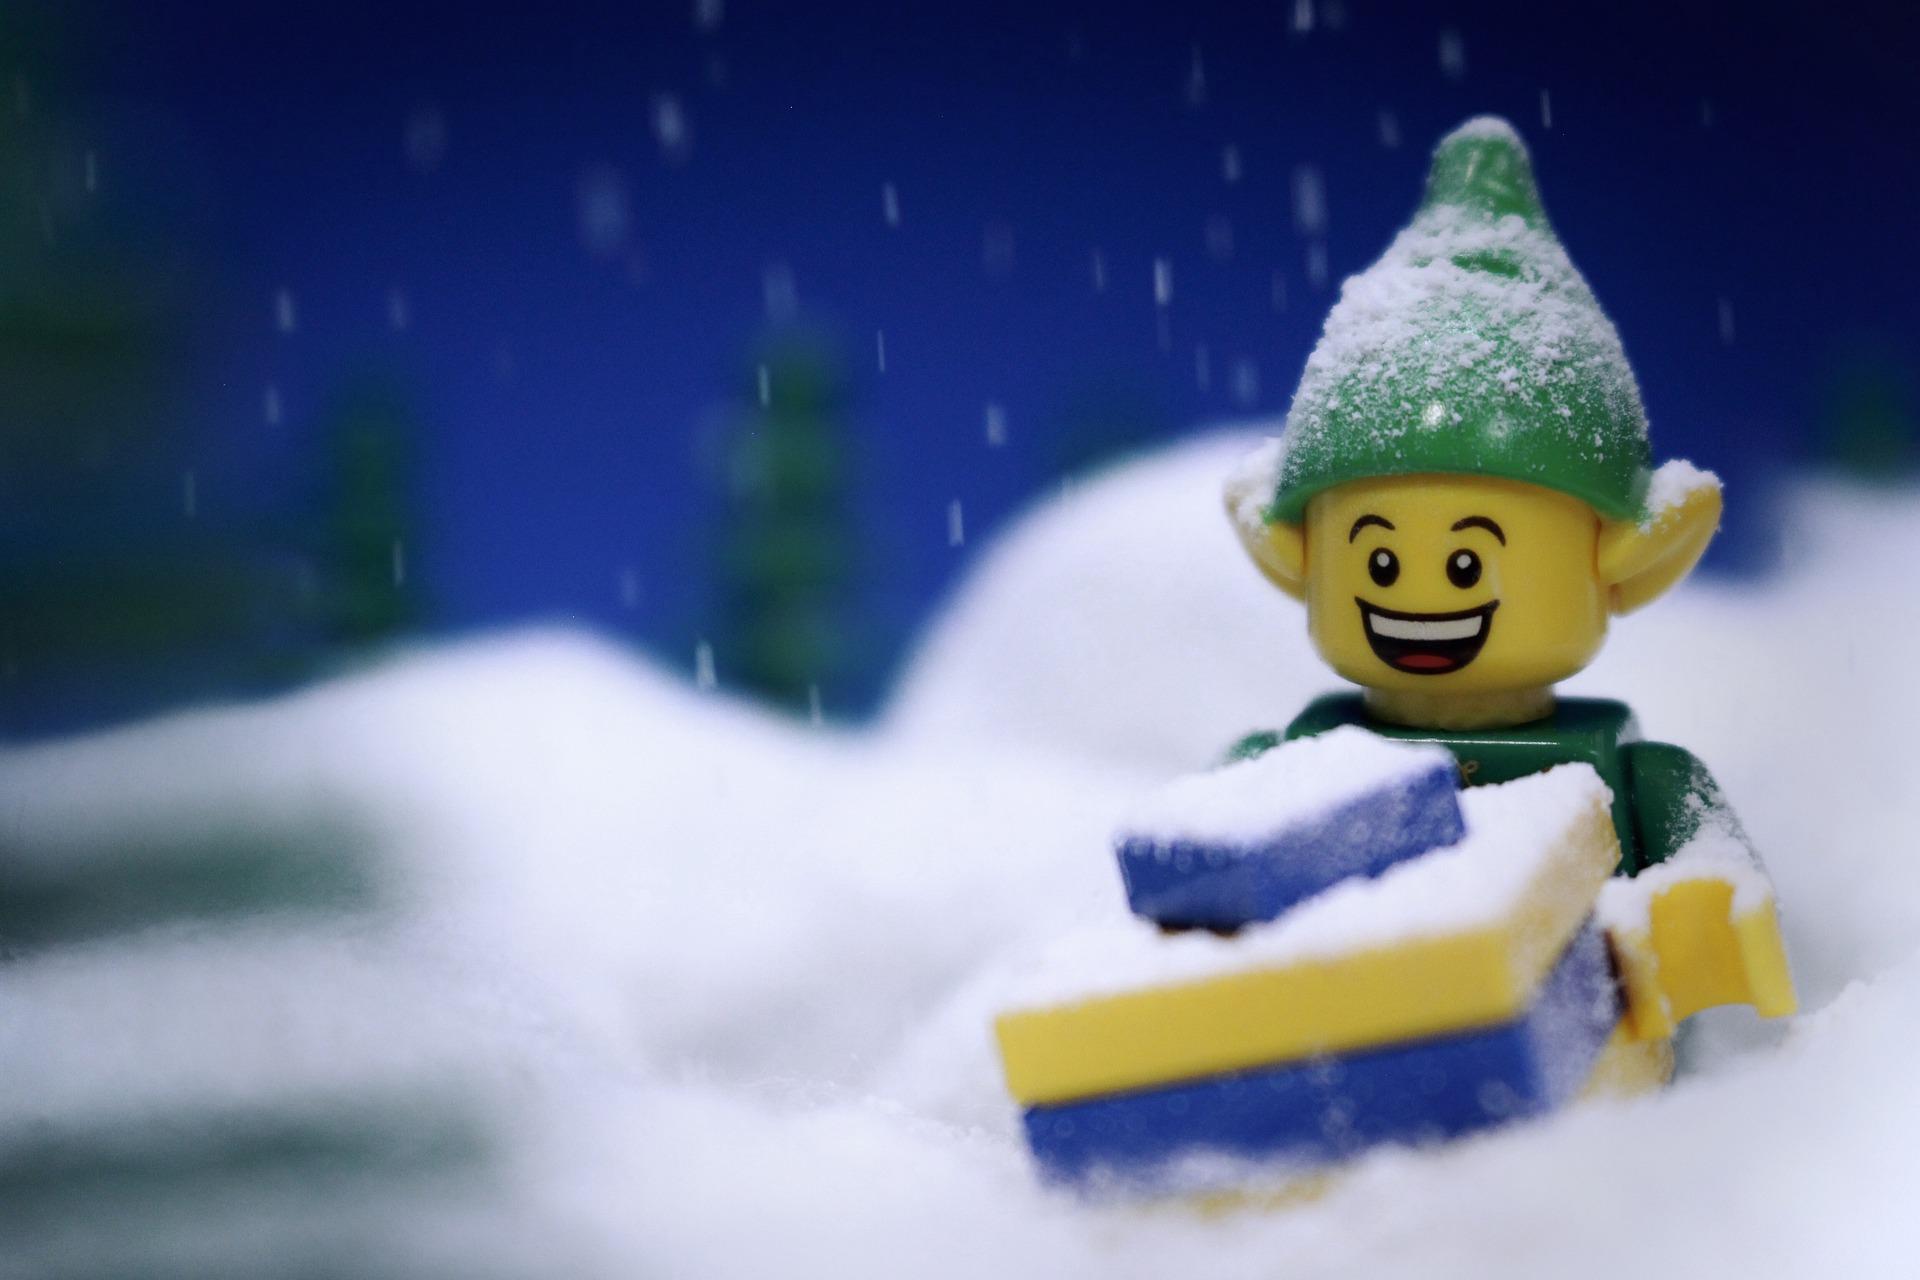 Lego elf figure in the snow